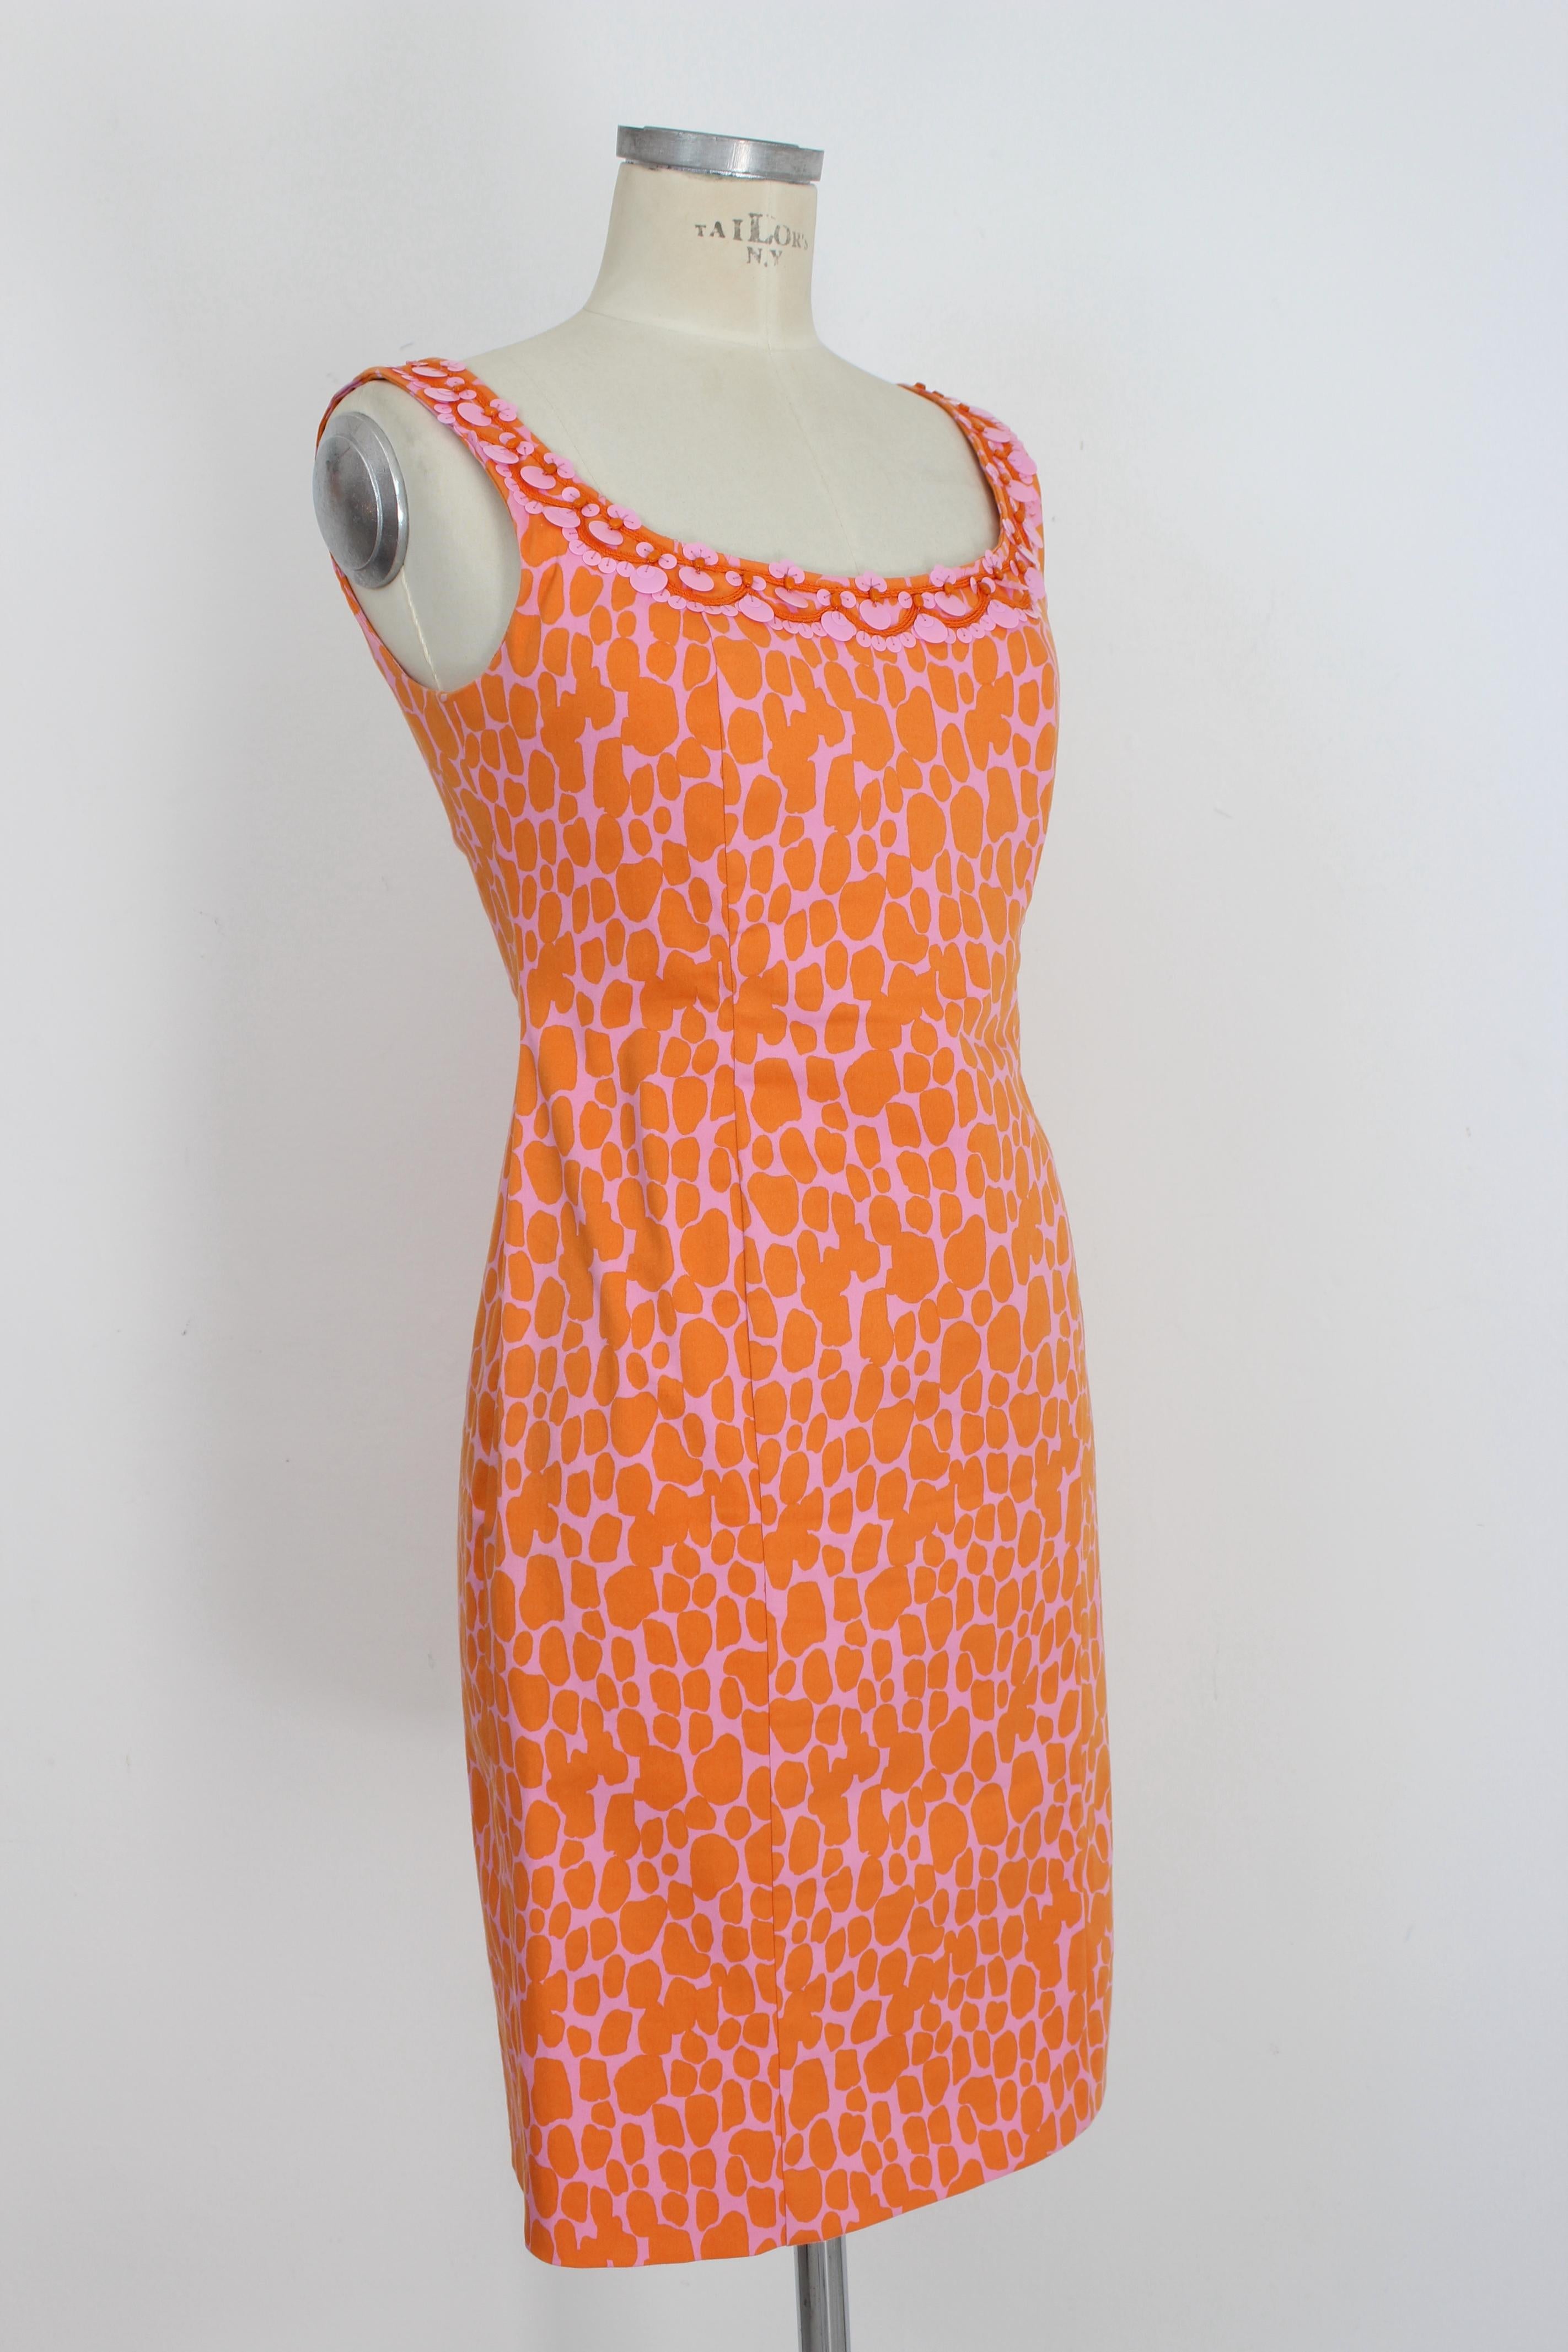 Blumarine Orange Spotted Sheath Dress In Excellent Condition In Brindisi, Bt